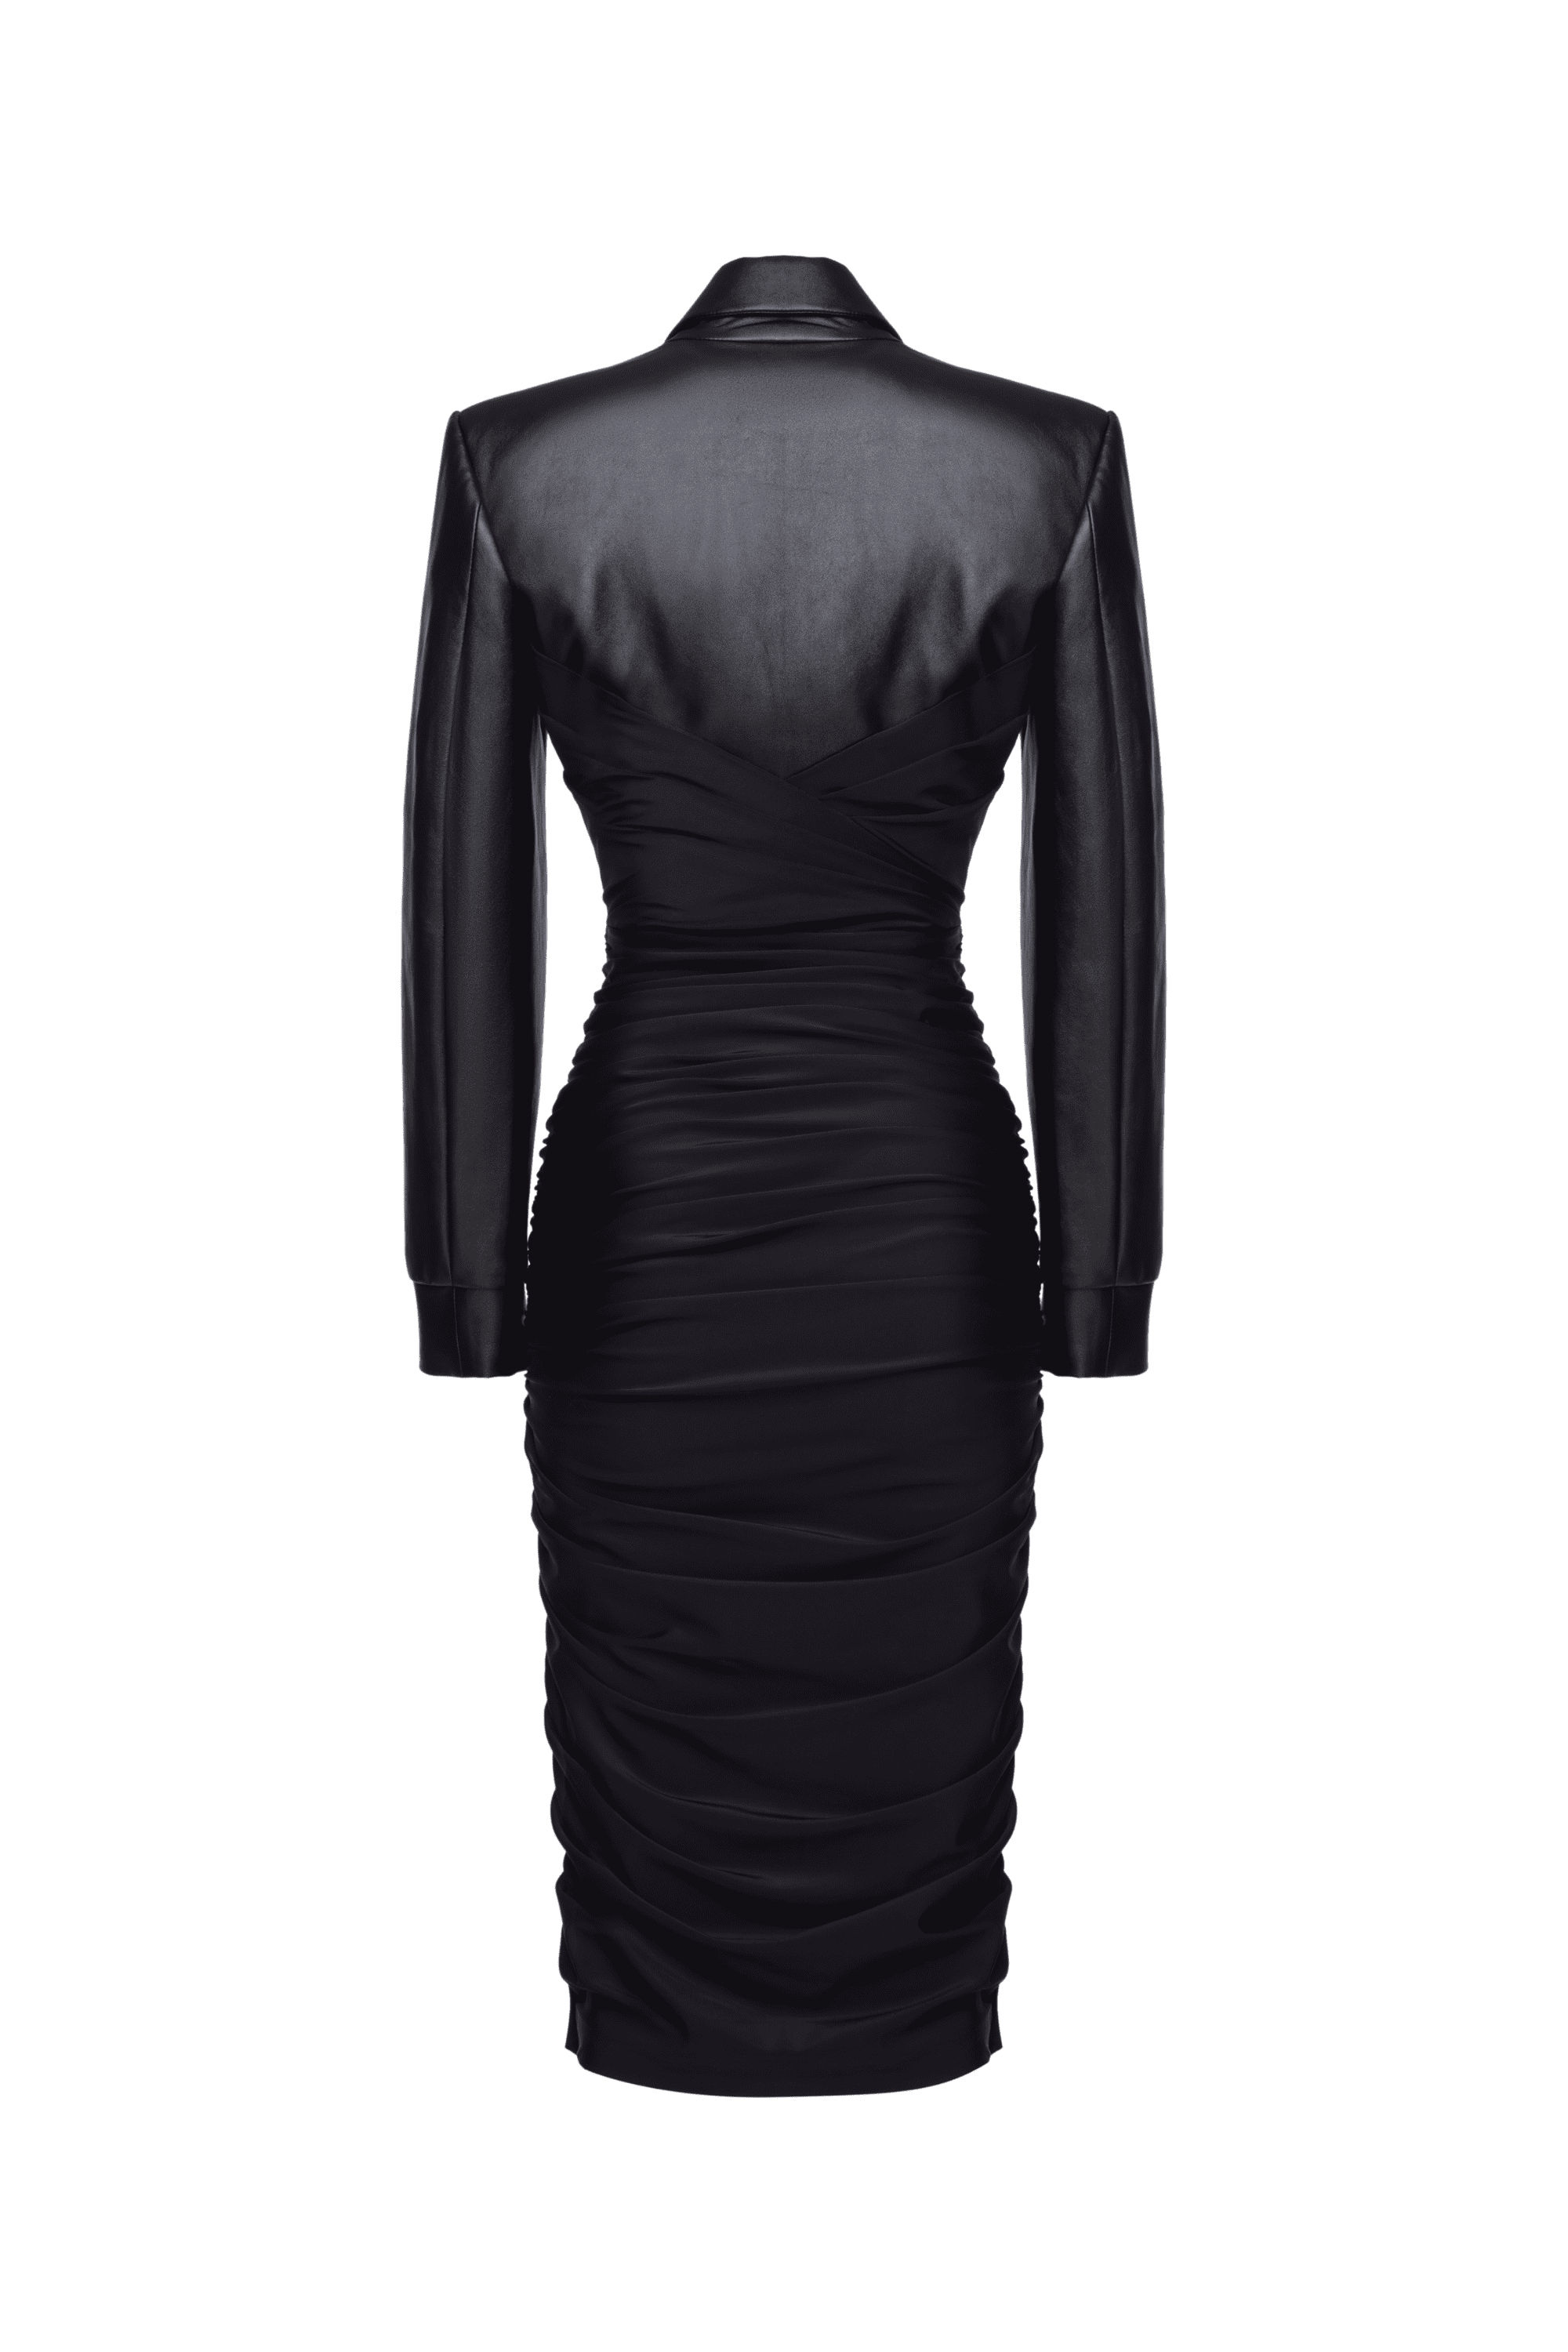 Black vegan leather Fatal dress